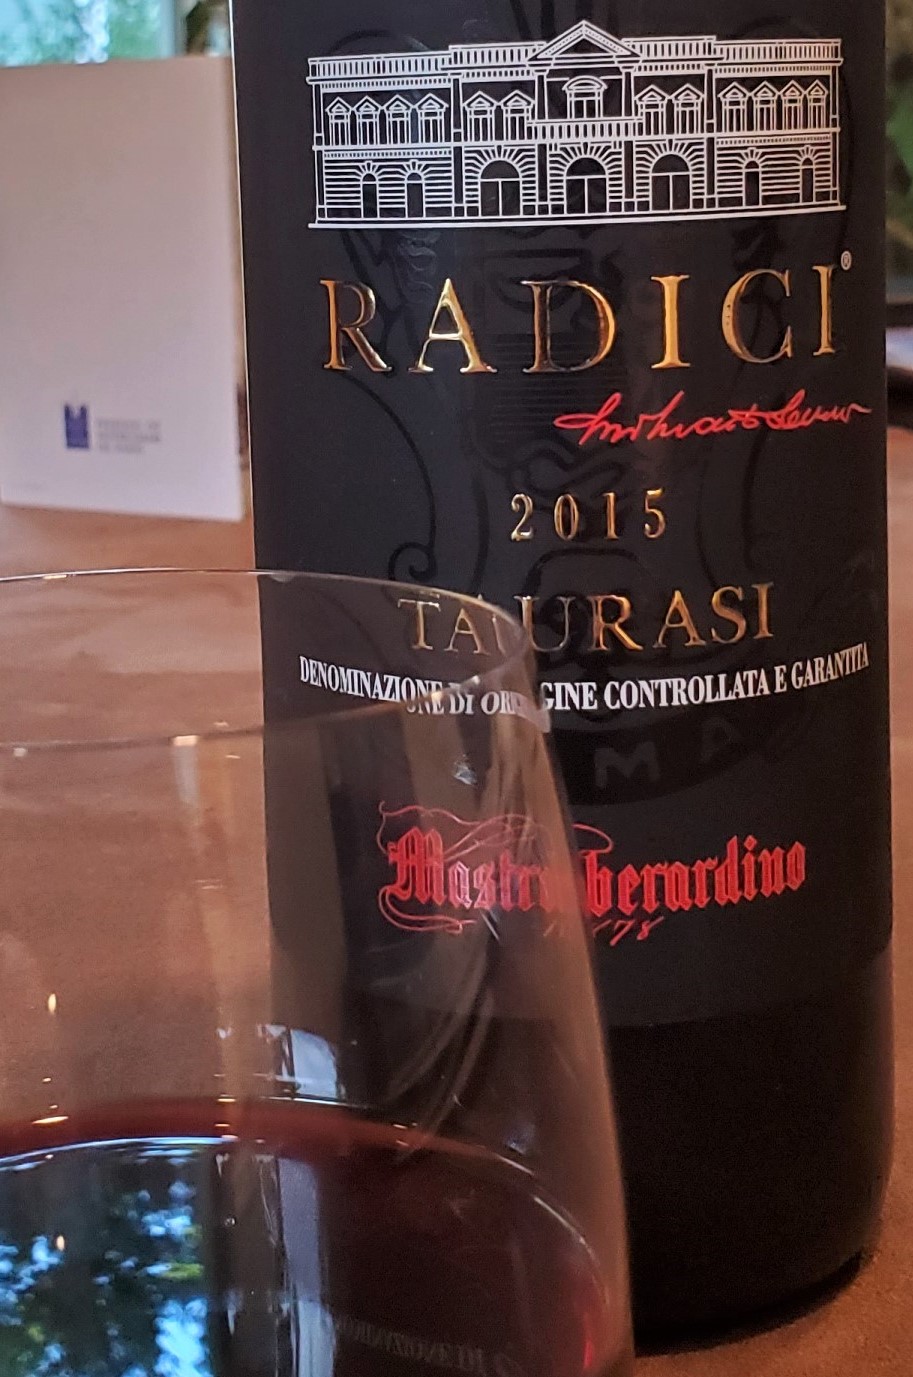 The 2015 “Radici” Taurasi DOCG from the Mastroberardino winery in Italy's Campania region.